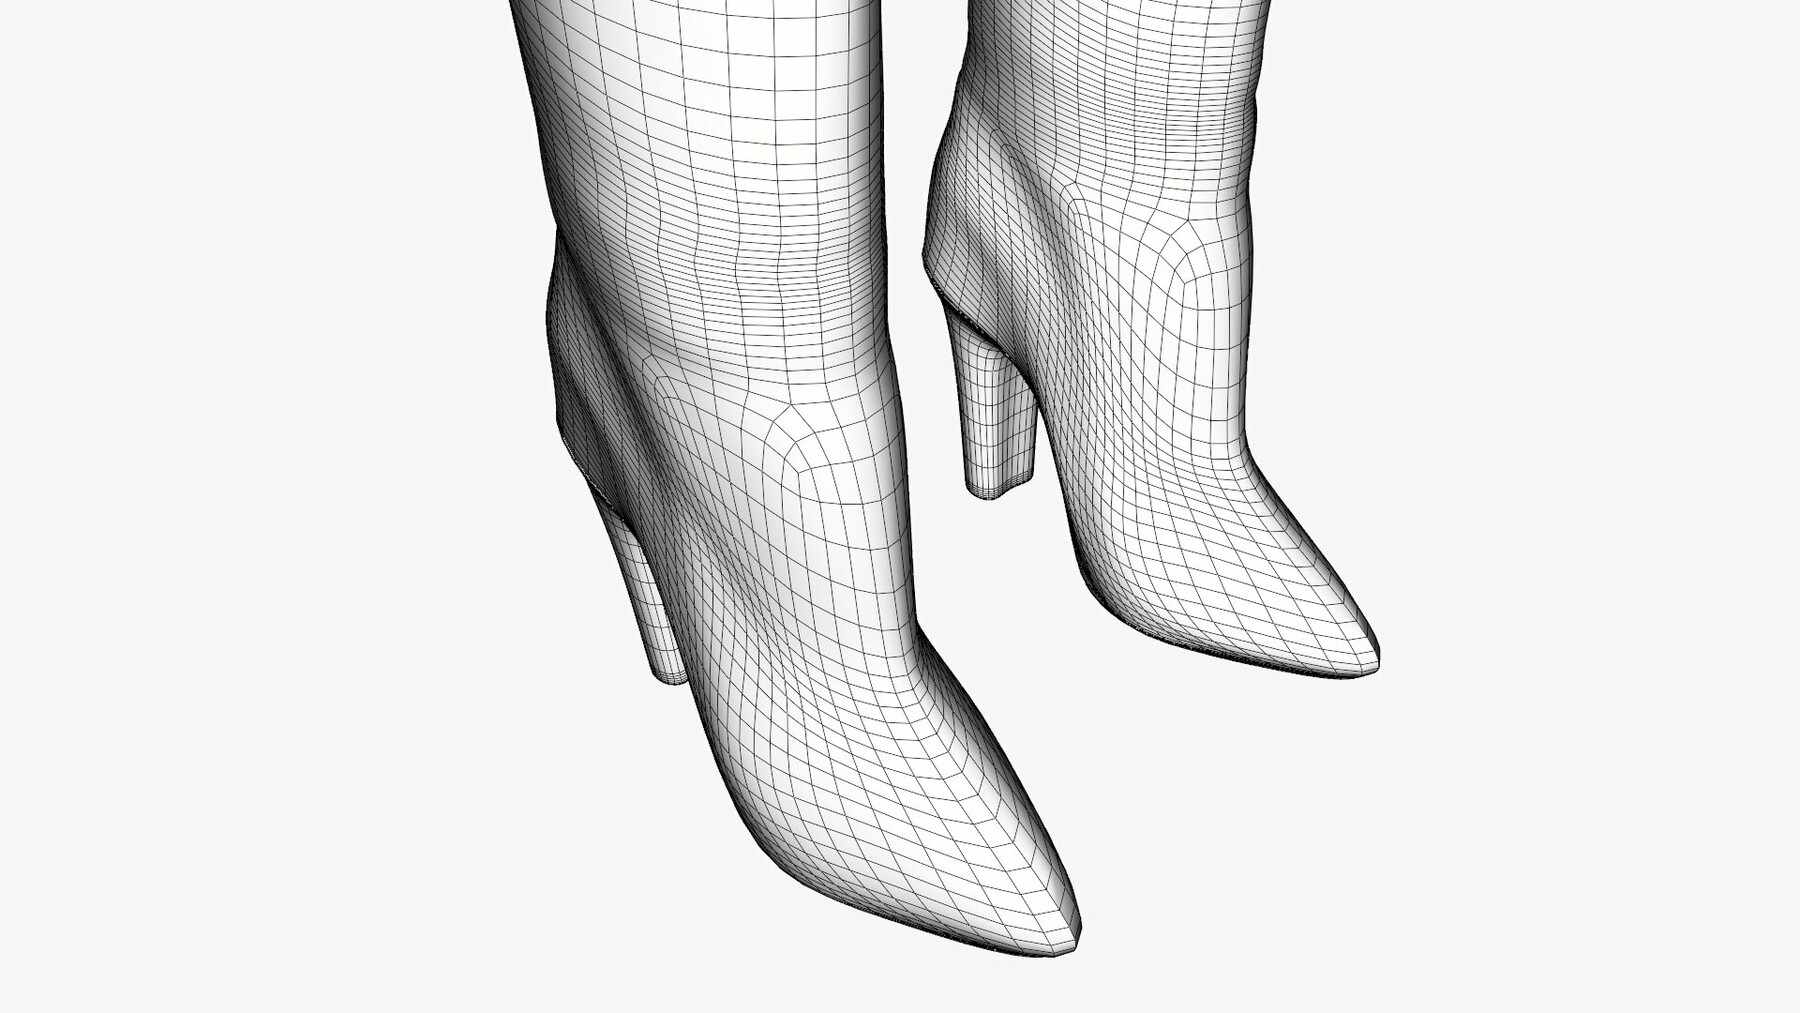 ArtStation - 3D Snakeskin boots | Resources